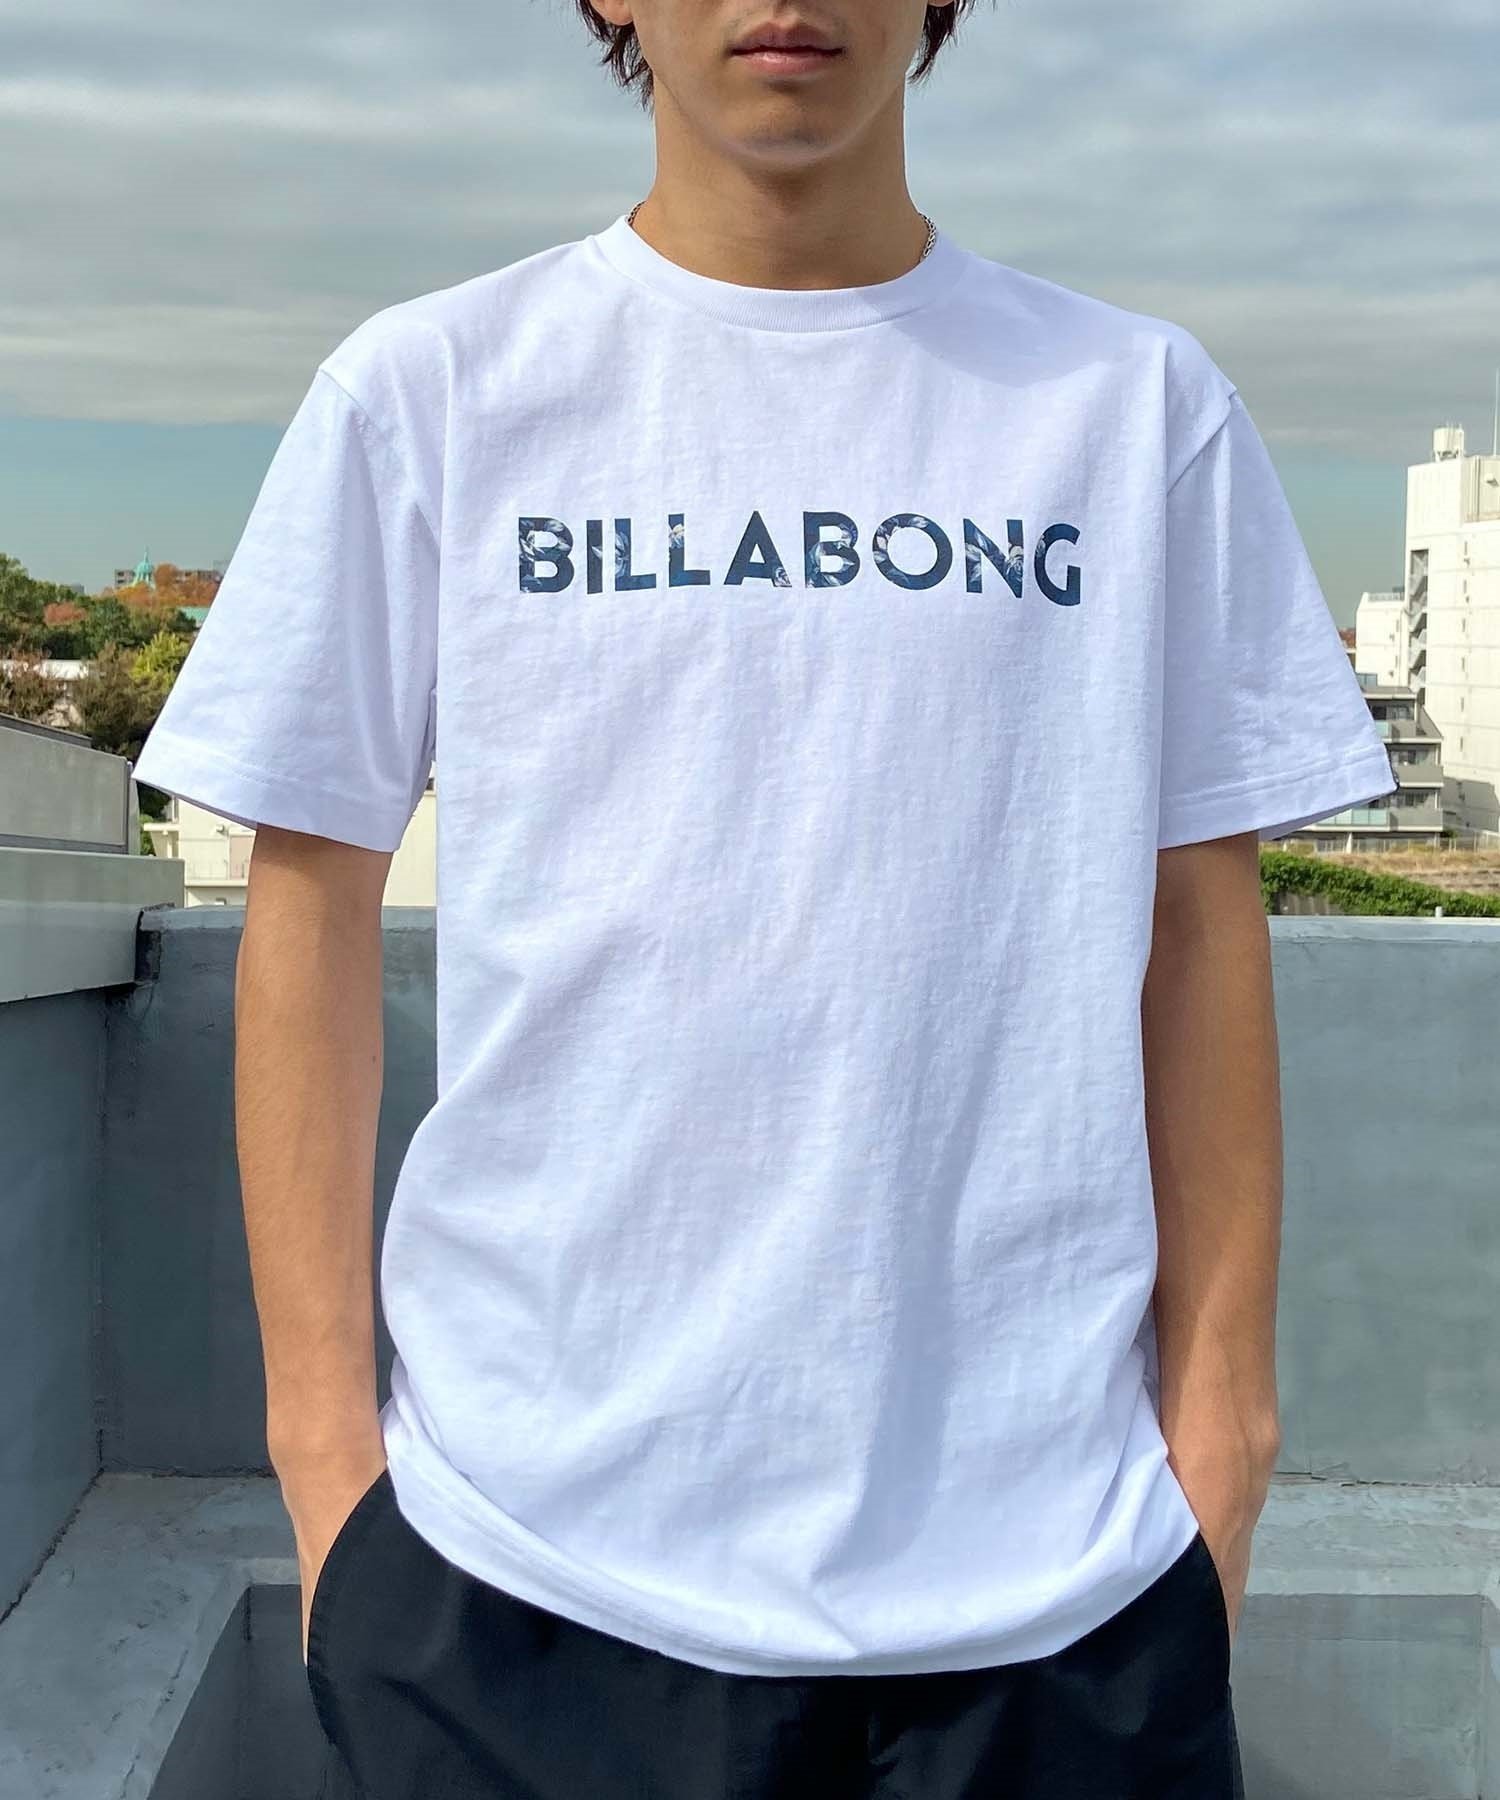 BILLABONG ビラボン UNITY LOGO Tシャツ 半袖 メンズ ロゴ BE011-200(WNY-S)